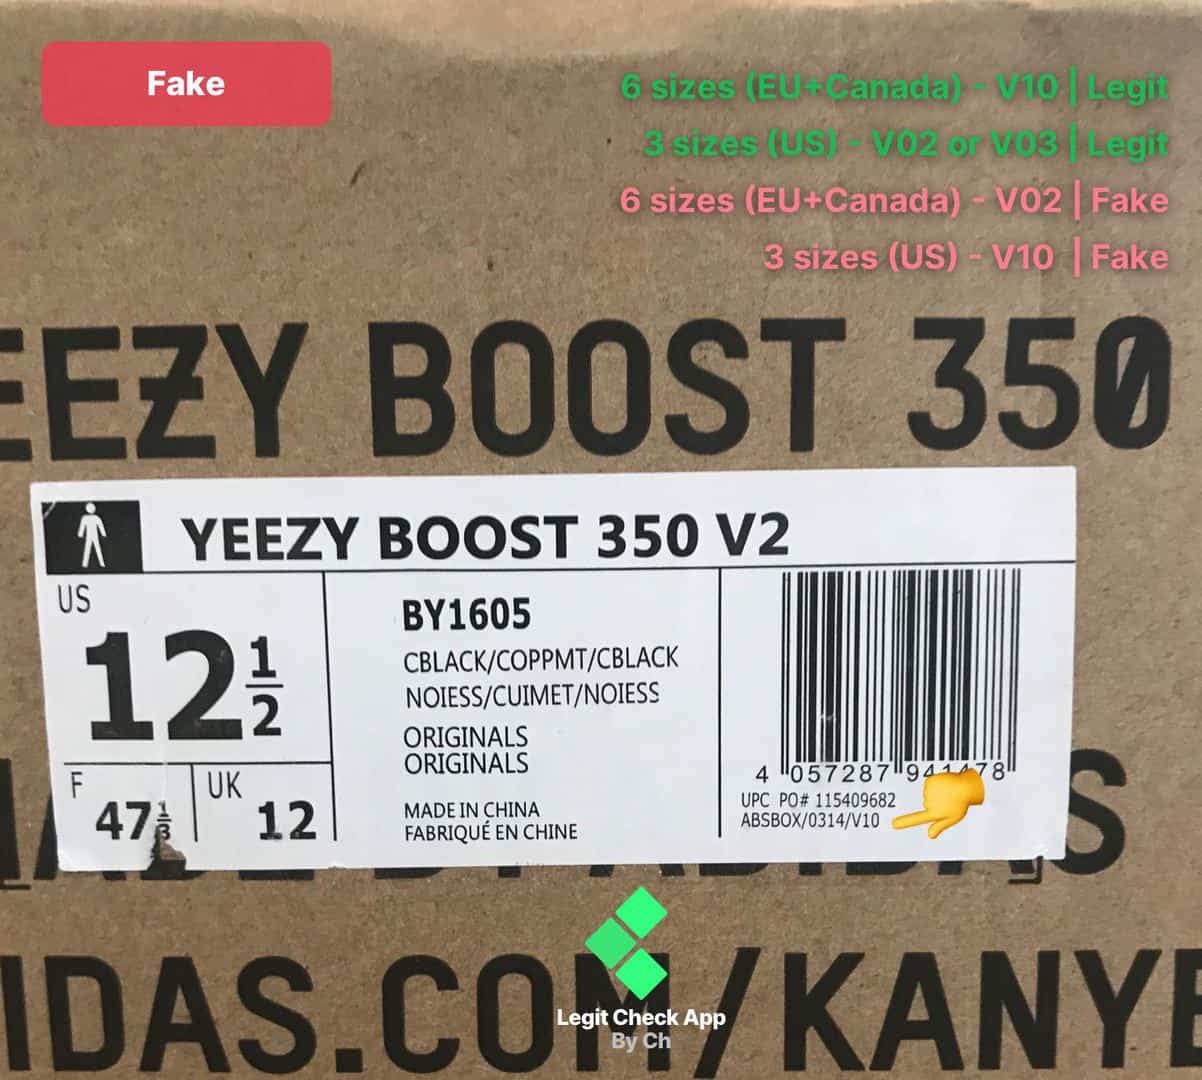 The Best Fake Vs Real Yeezy Boost 350 V2 Box Comparison Legit Check